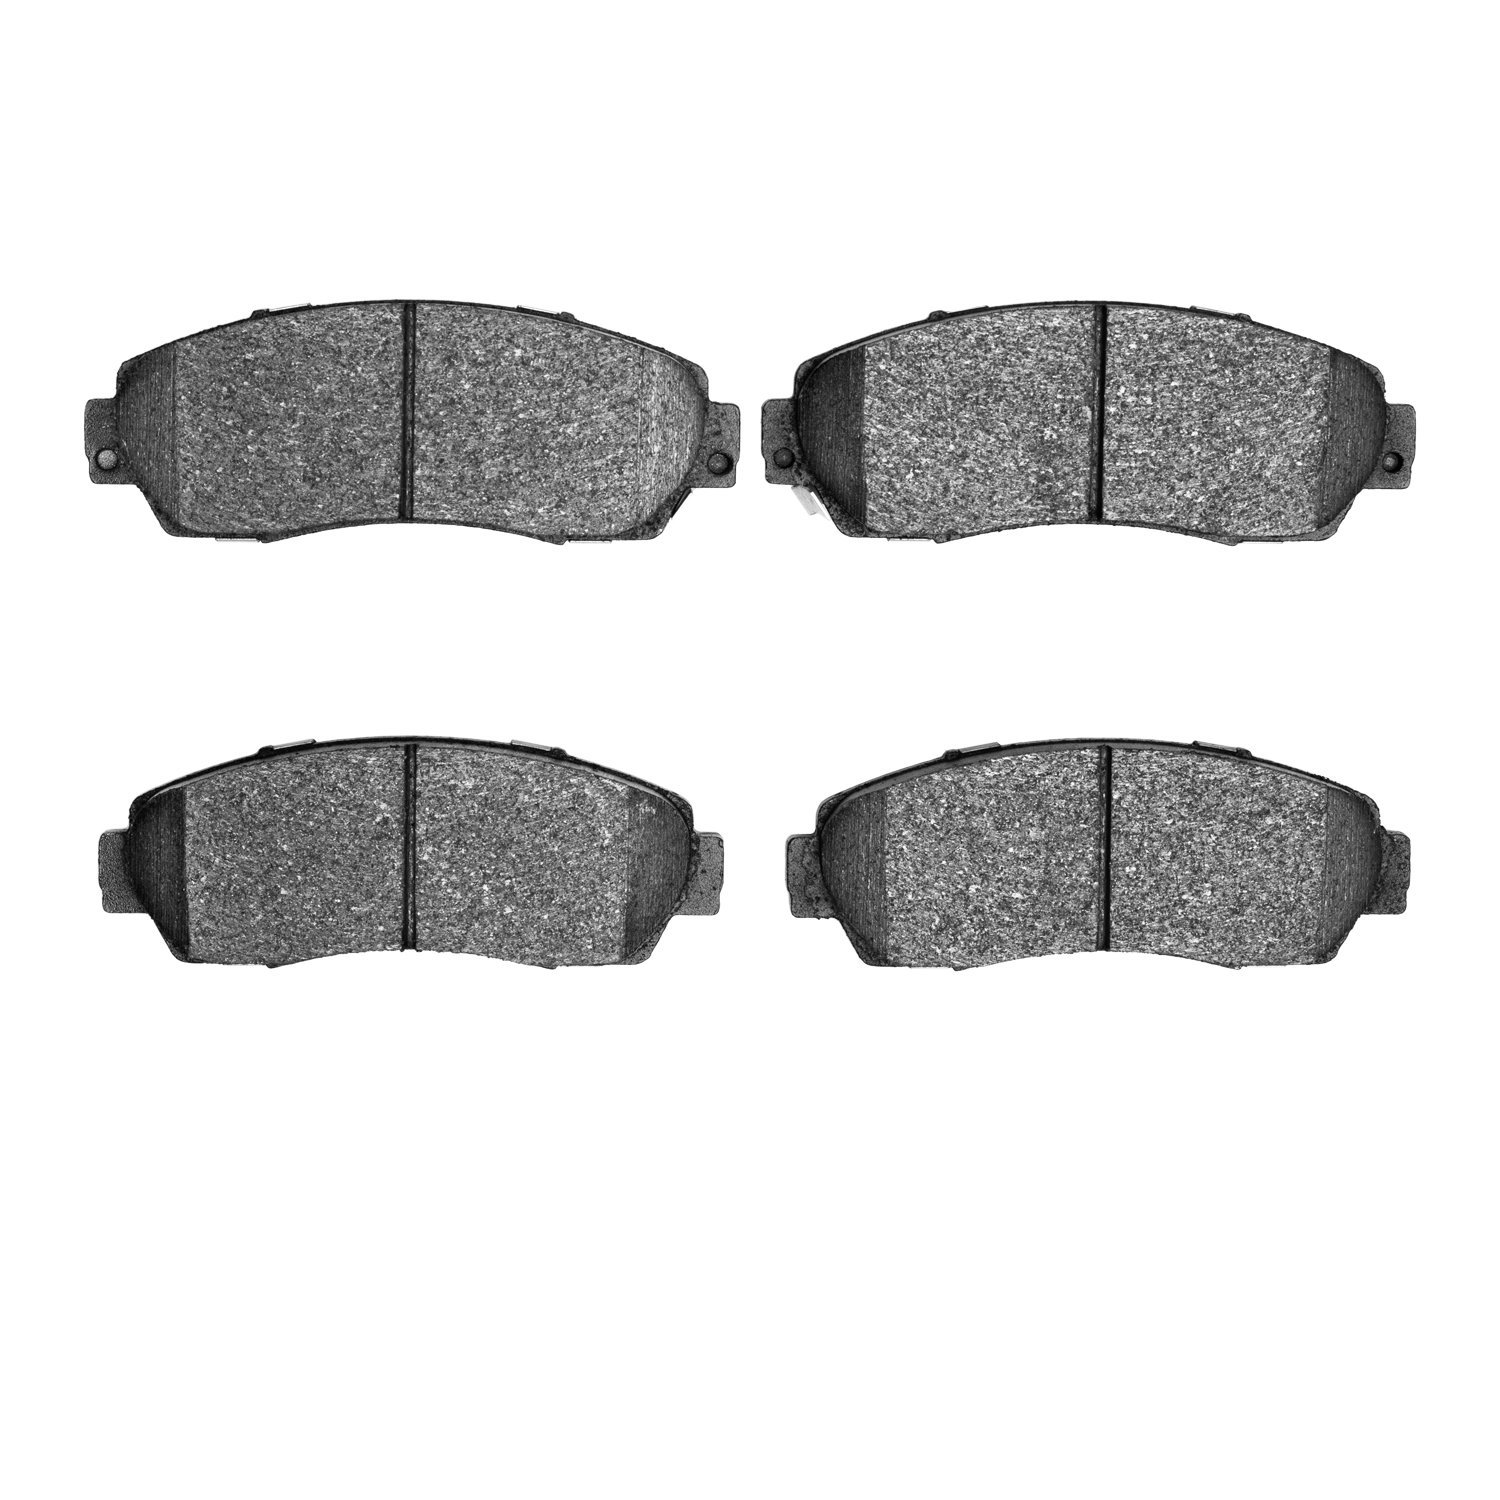 1551-1521-00 5000 Advanced Ceramic Brake Pads, Fits Select Multiple Makes/Models, Position: Front